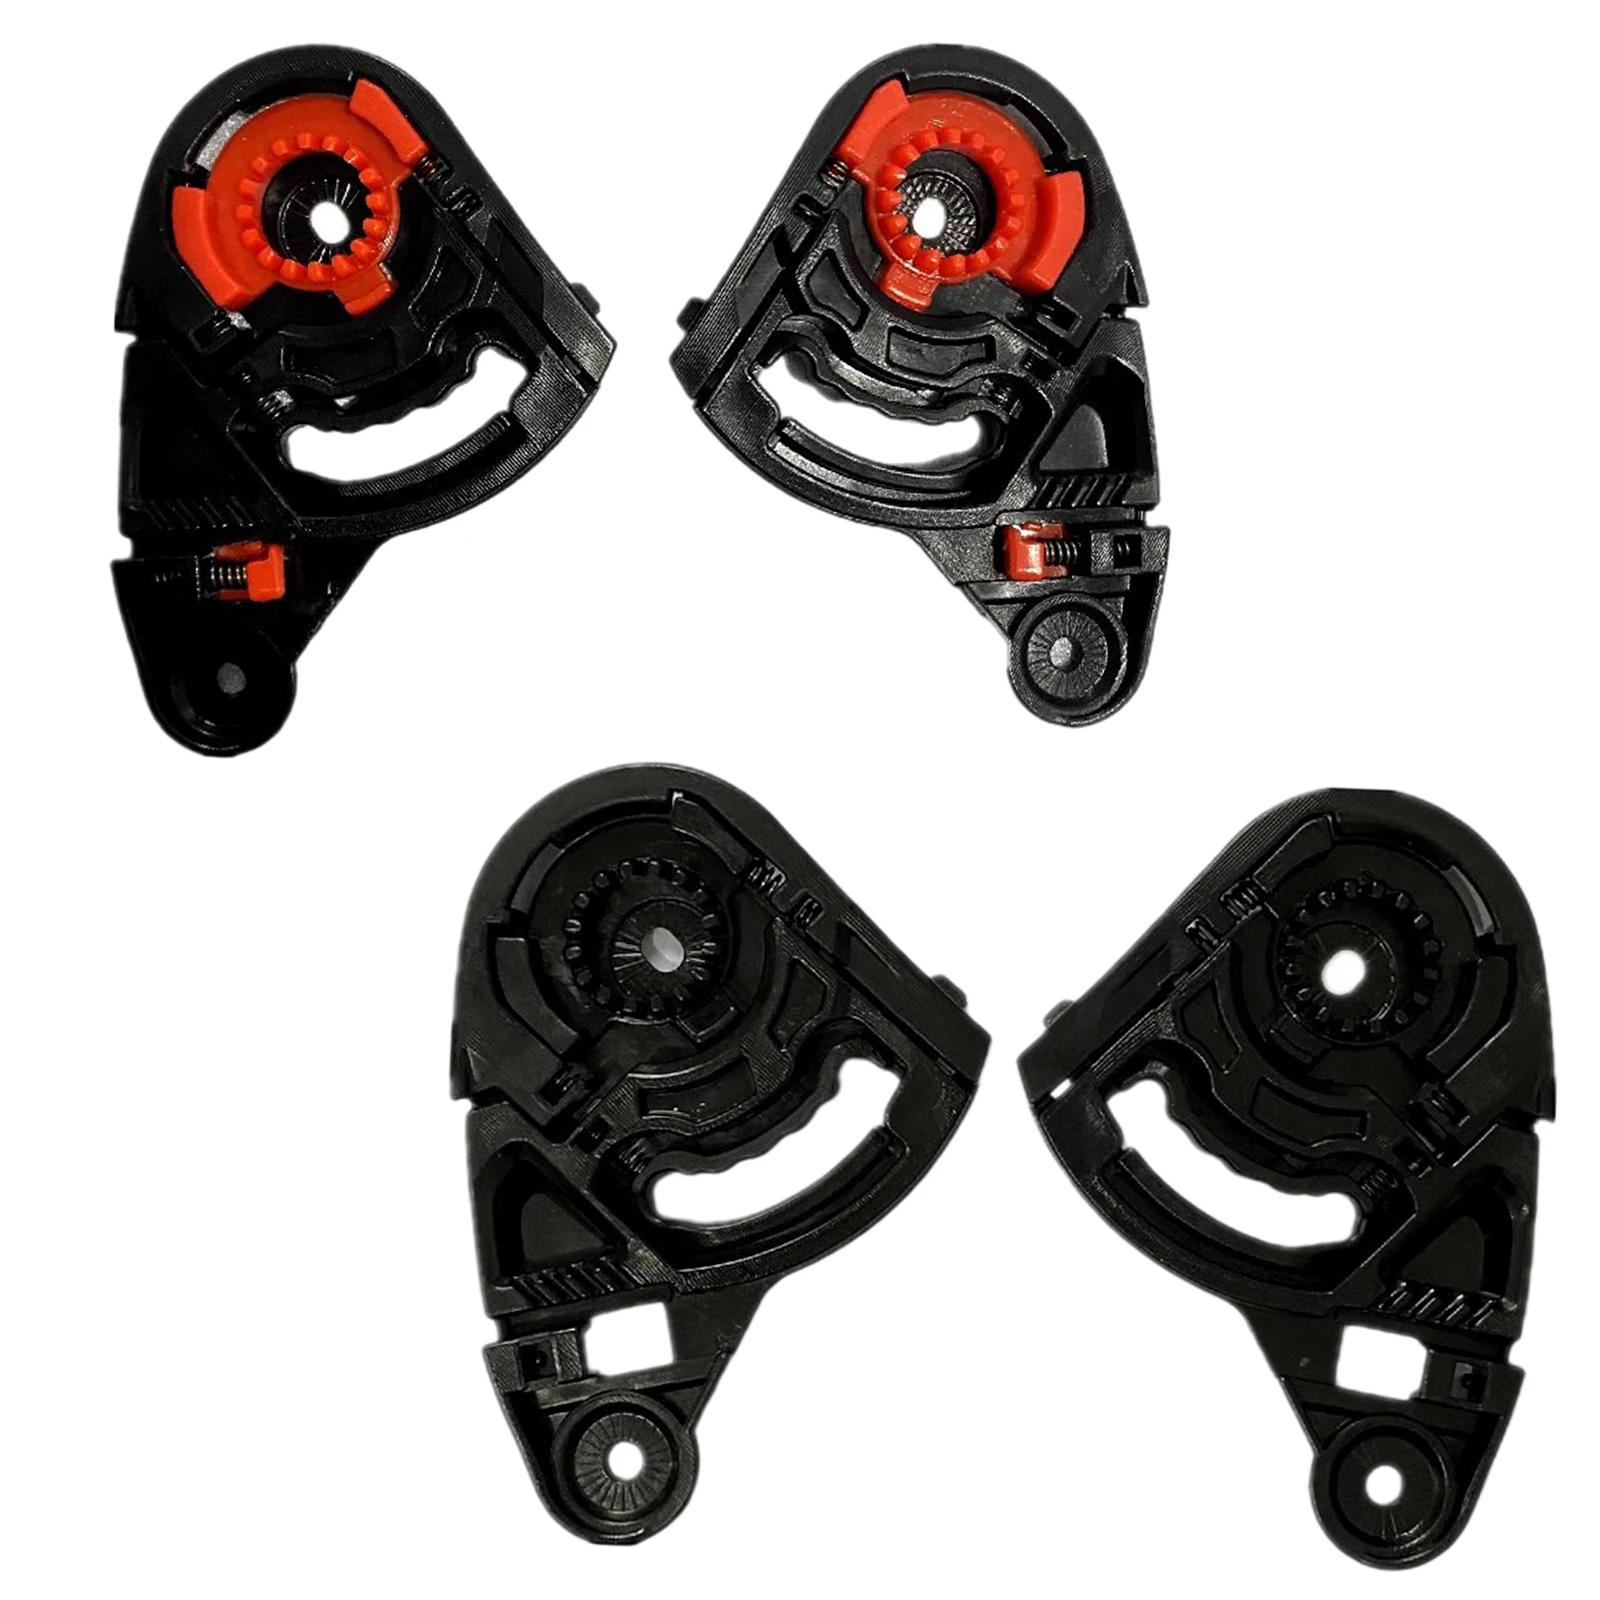 Motorcycle Helmet Gear Plate/Ratchet Set Shield Plastic Case Fit for MT , Blade2 Revenge2 Rapide Bike Racing